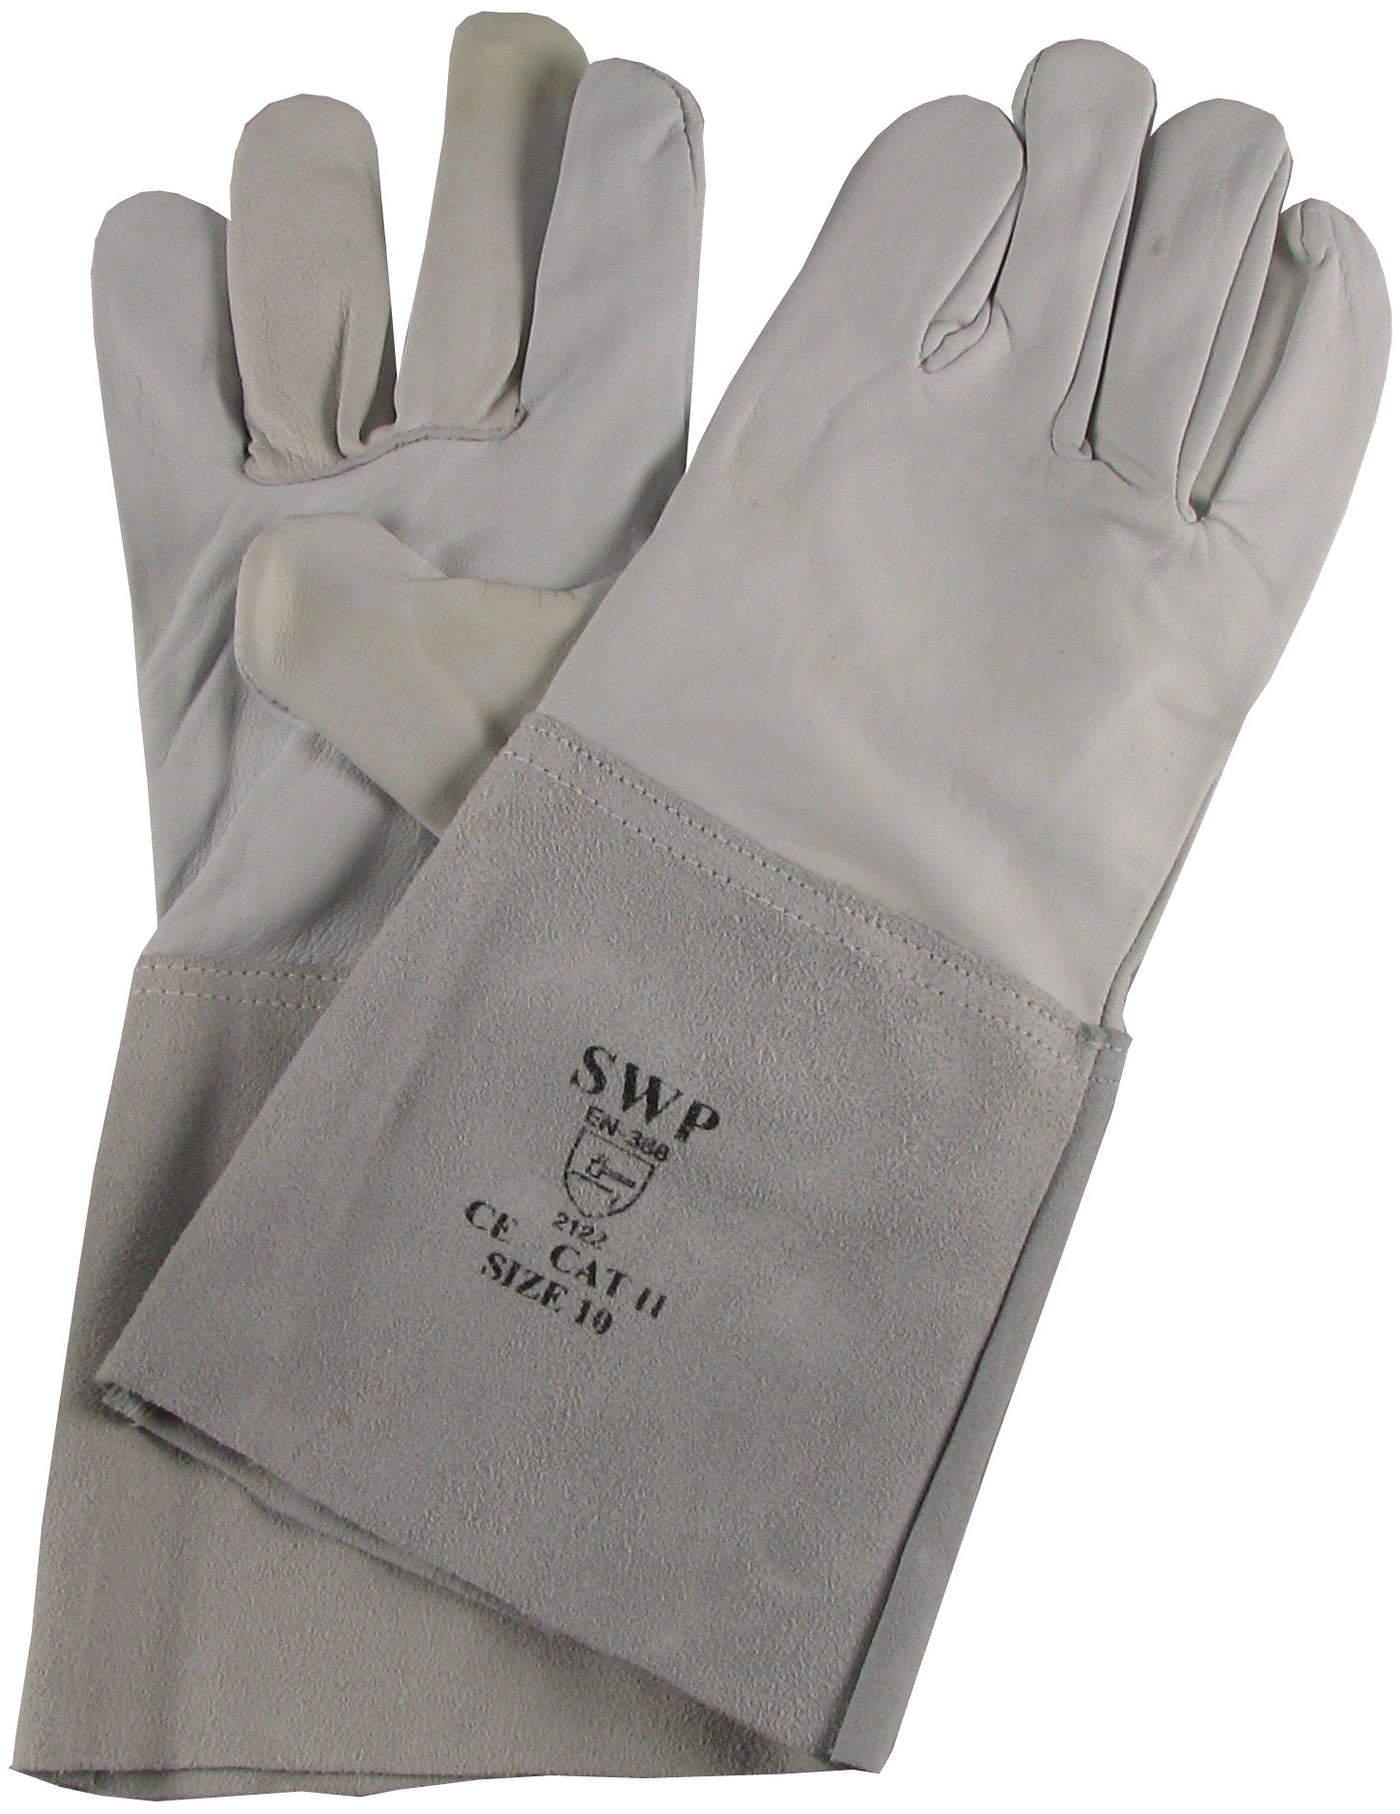 SWP Tig Gloves 6Ins Chrome Cuff